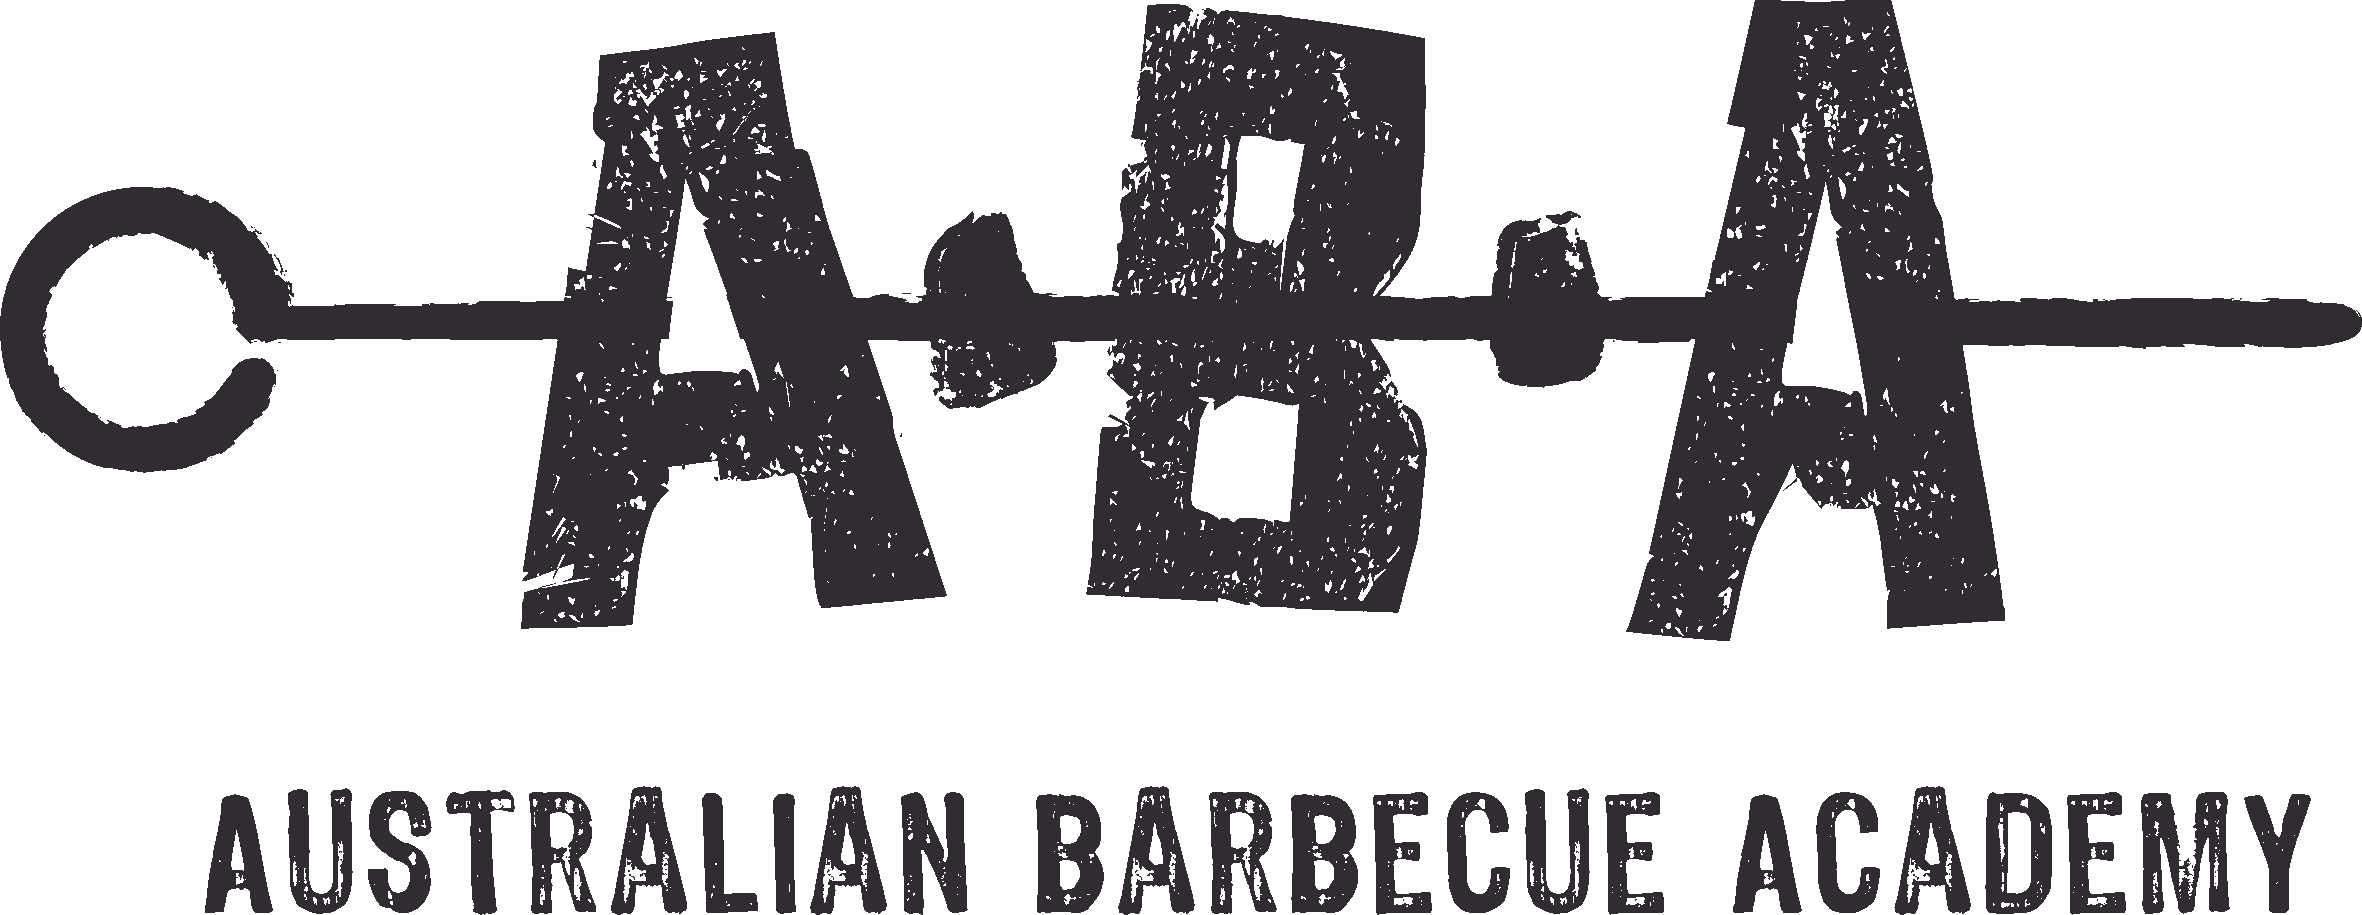 grilling clipart australia day bbq